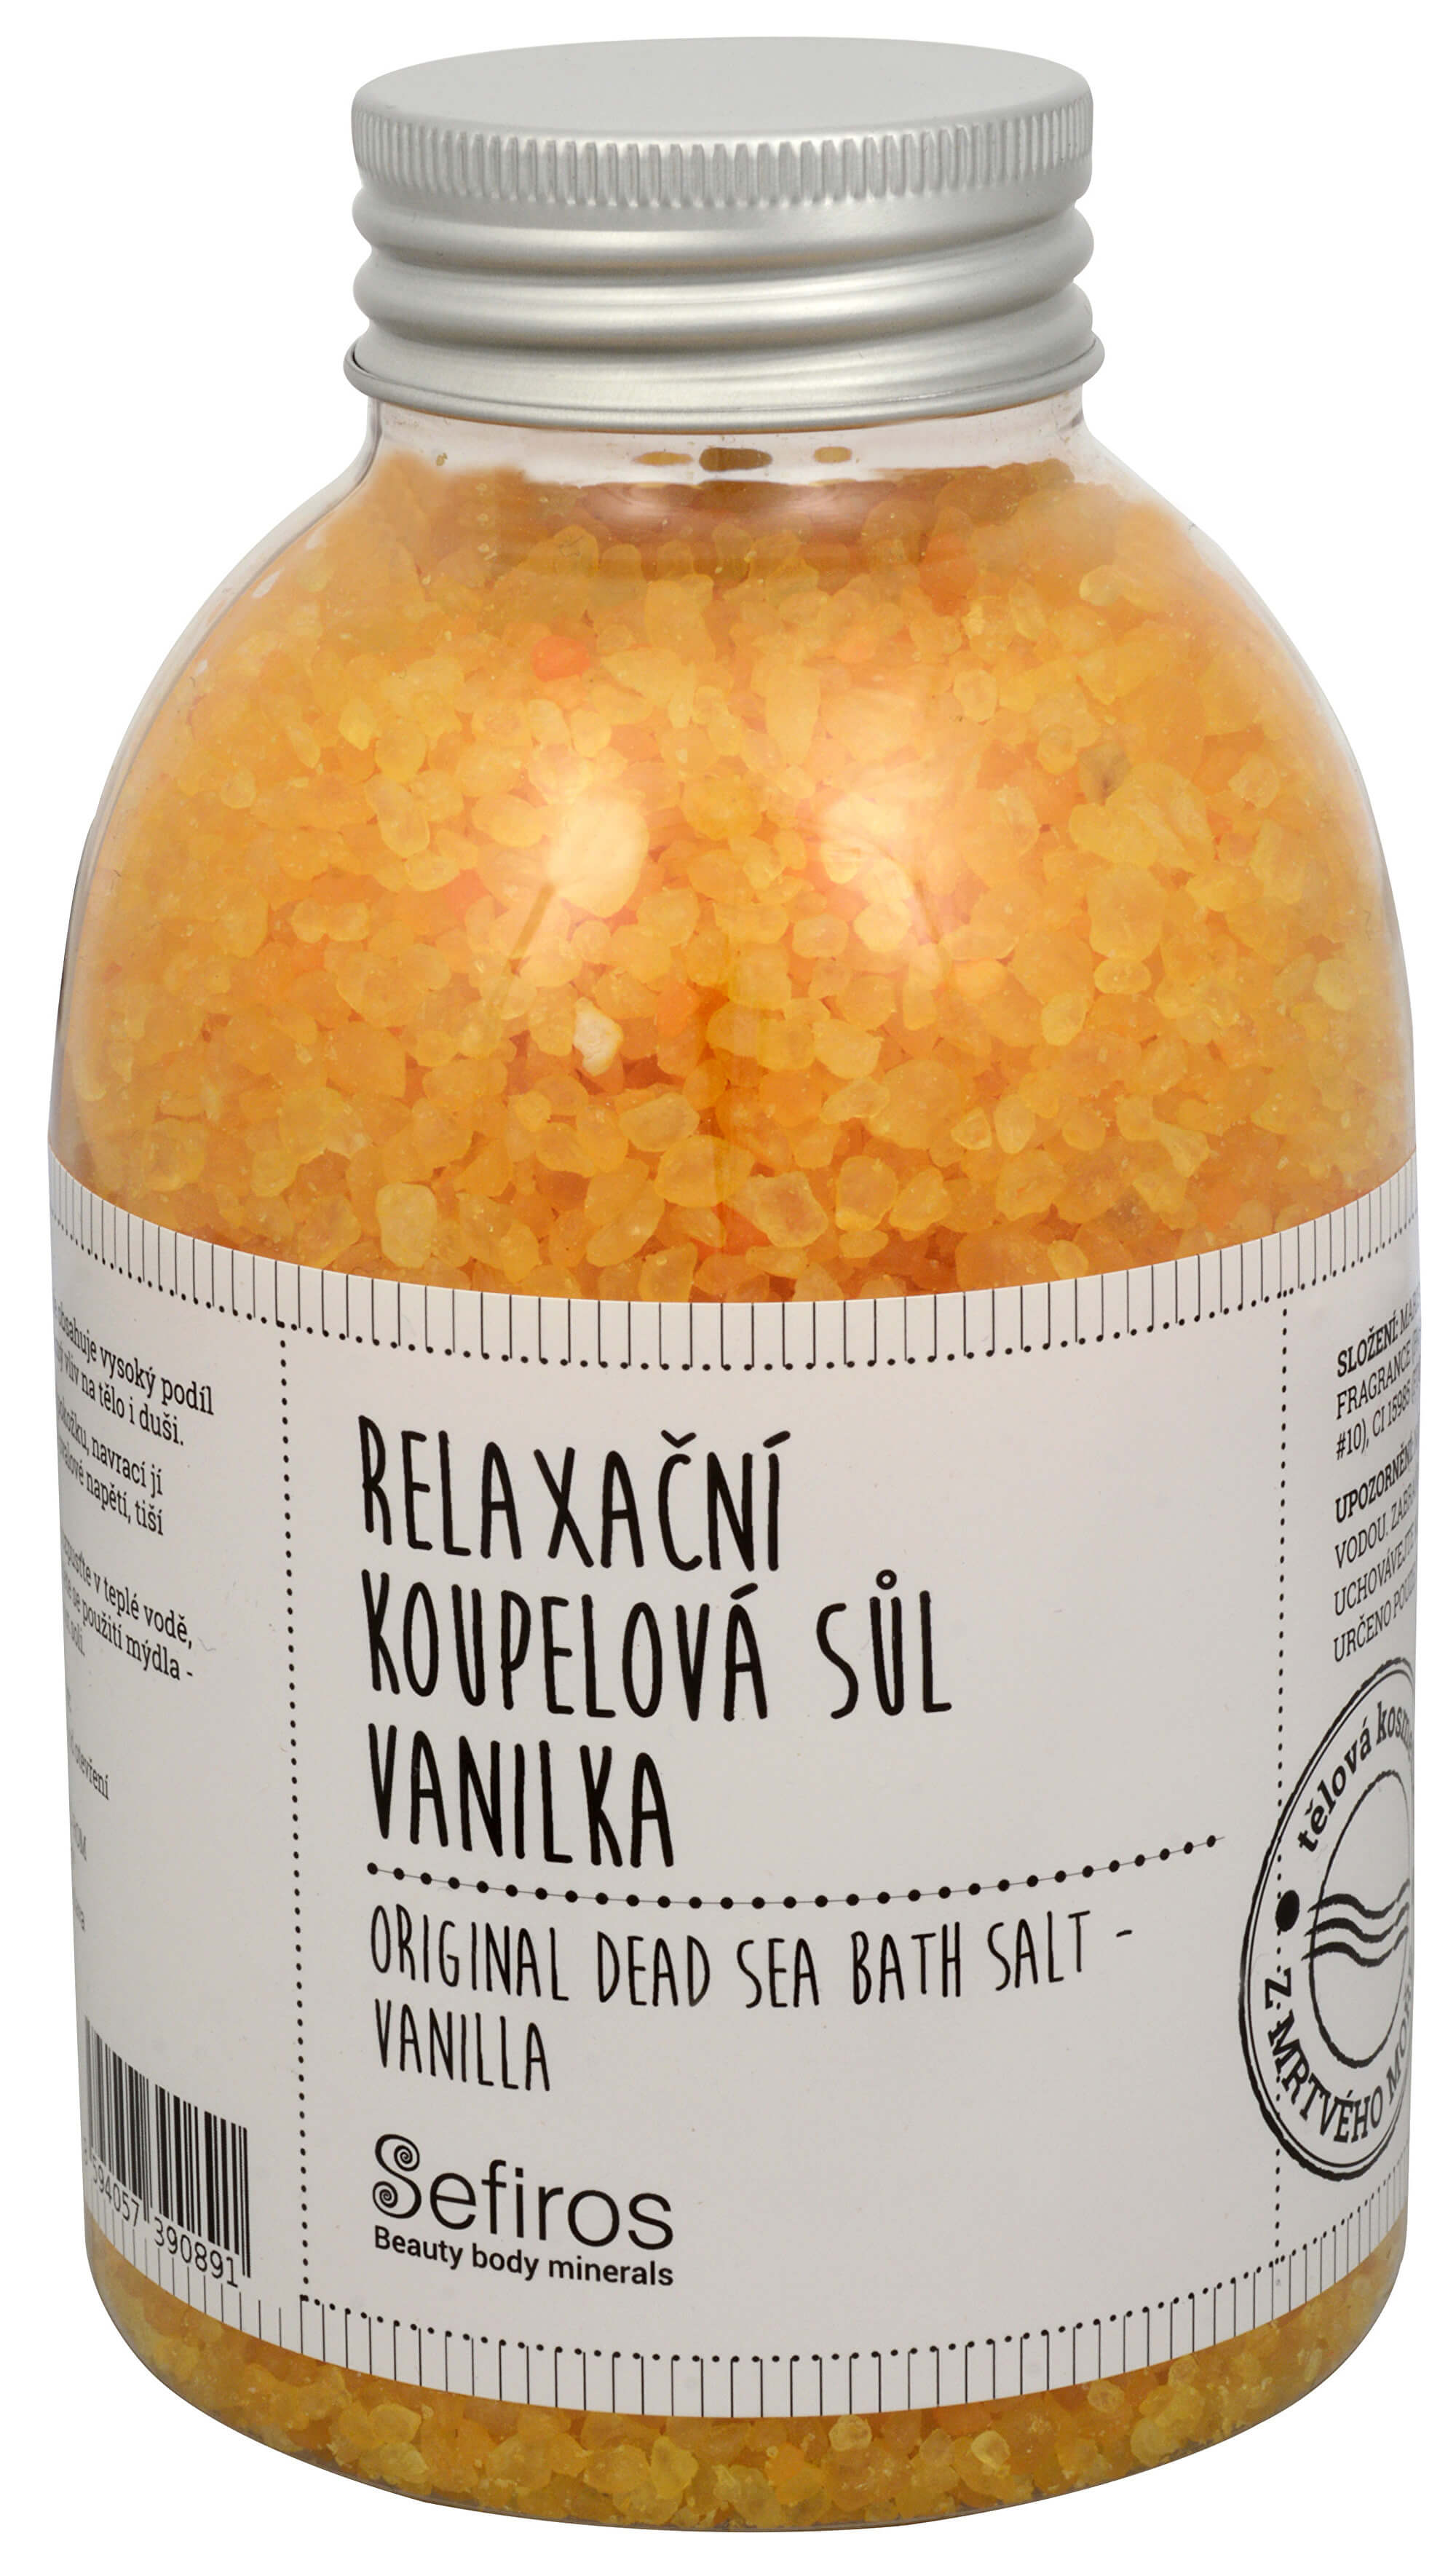 Sefiross Relaxační koupelová sůl Vanilka (Original Dead Sea Bath Salt) 500 g